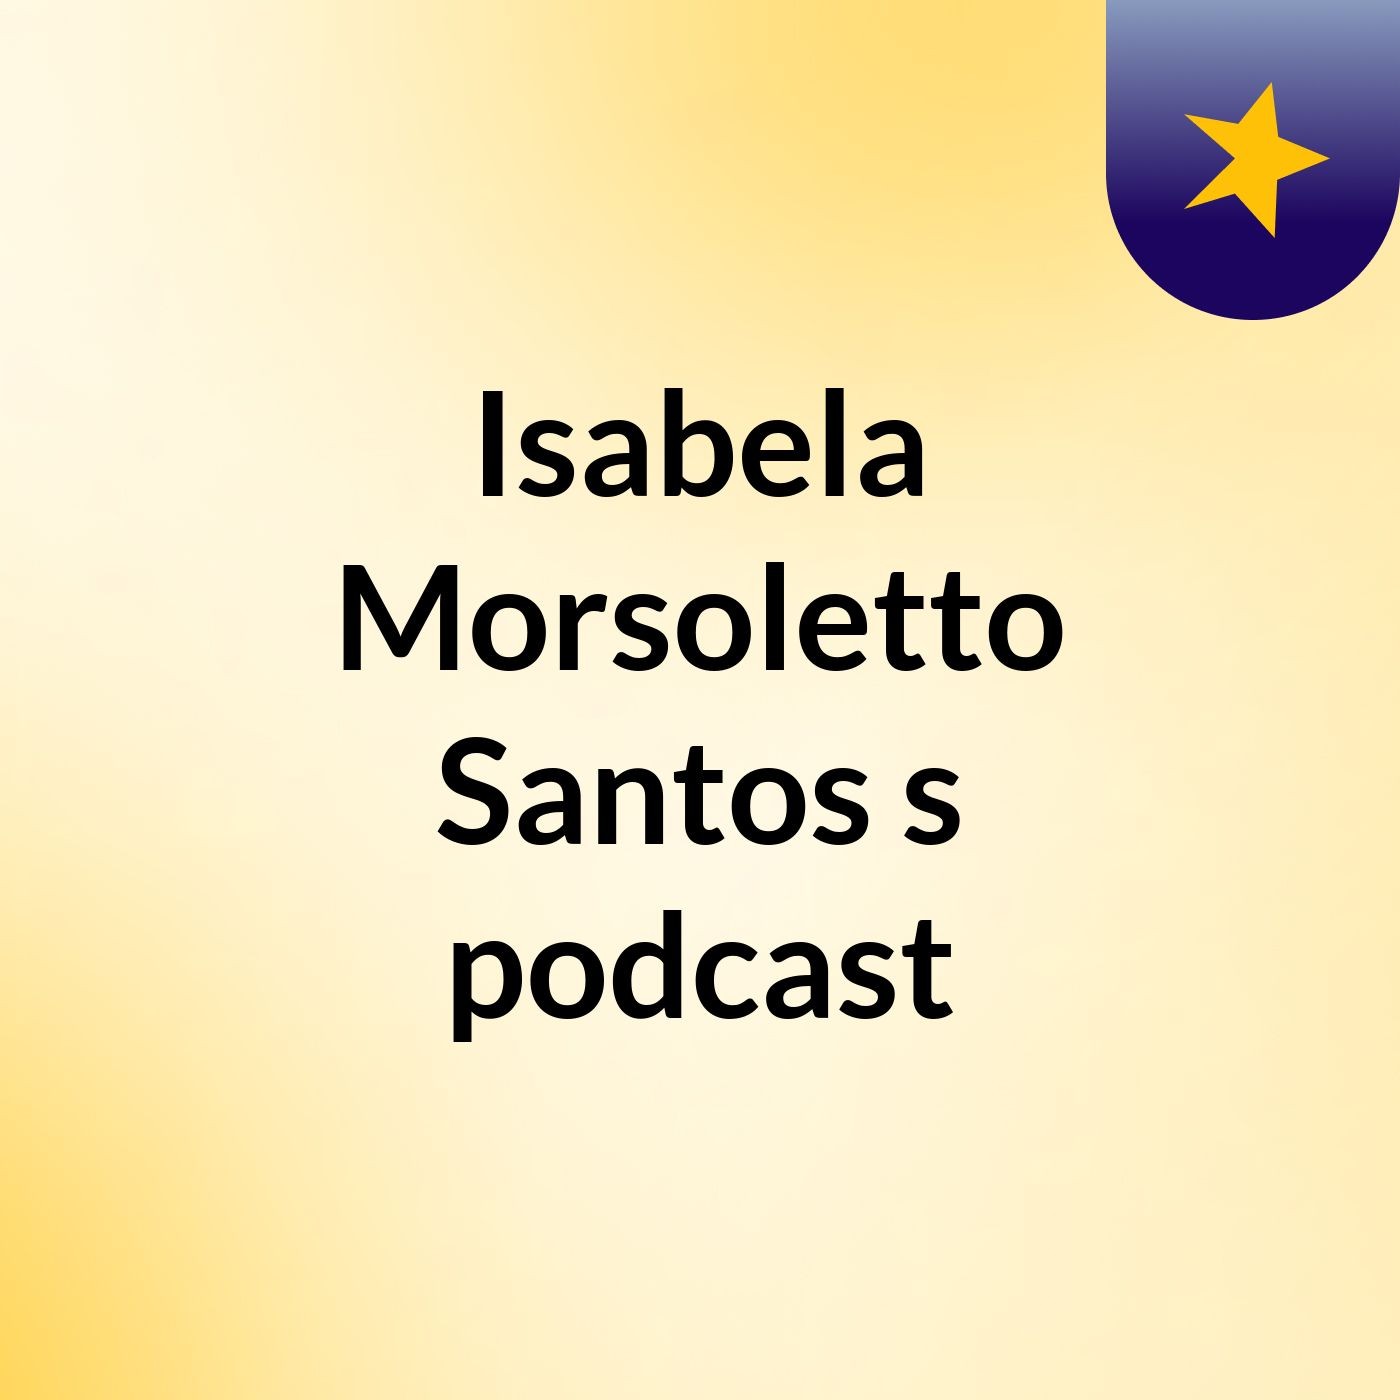 Isabela Morsoletto Santos's podcast